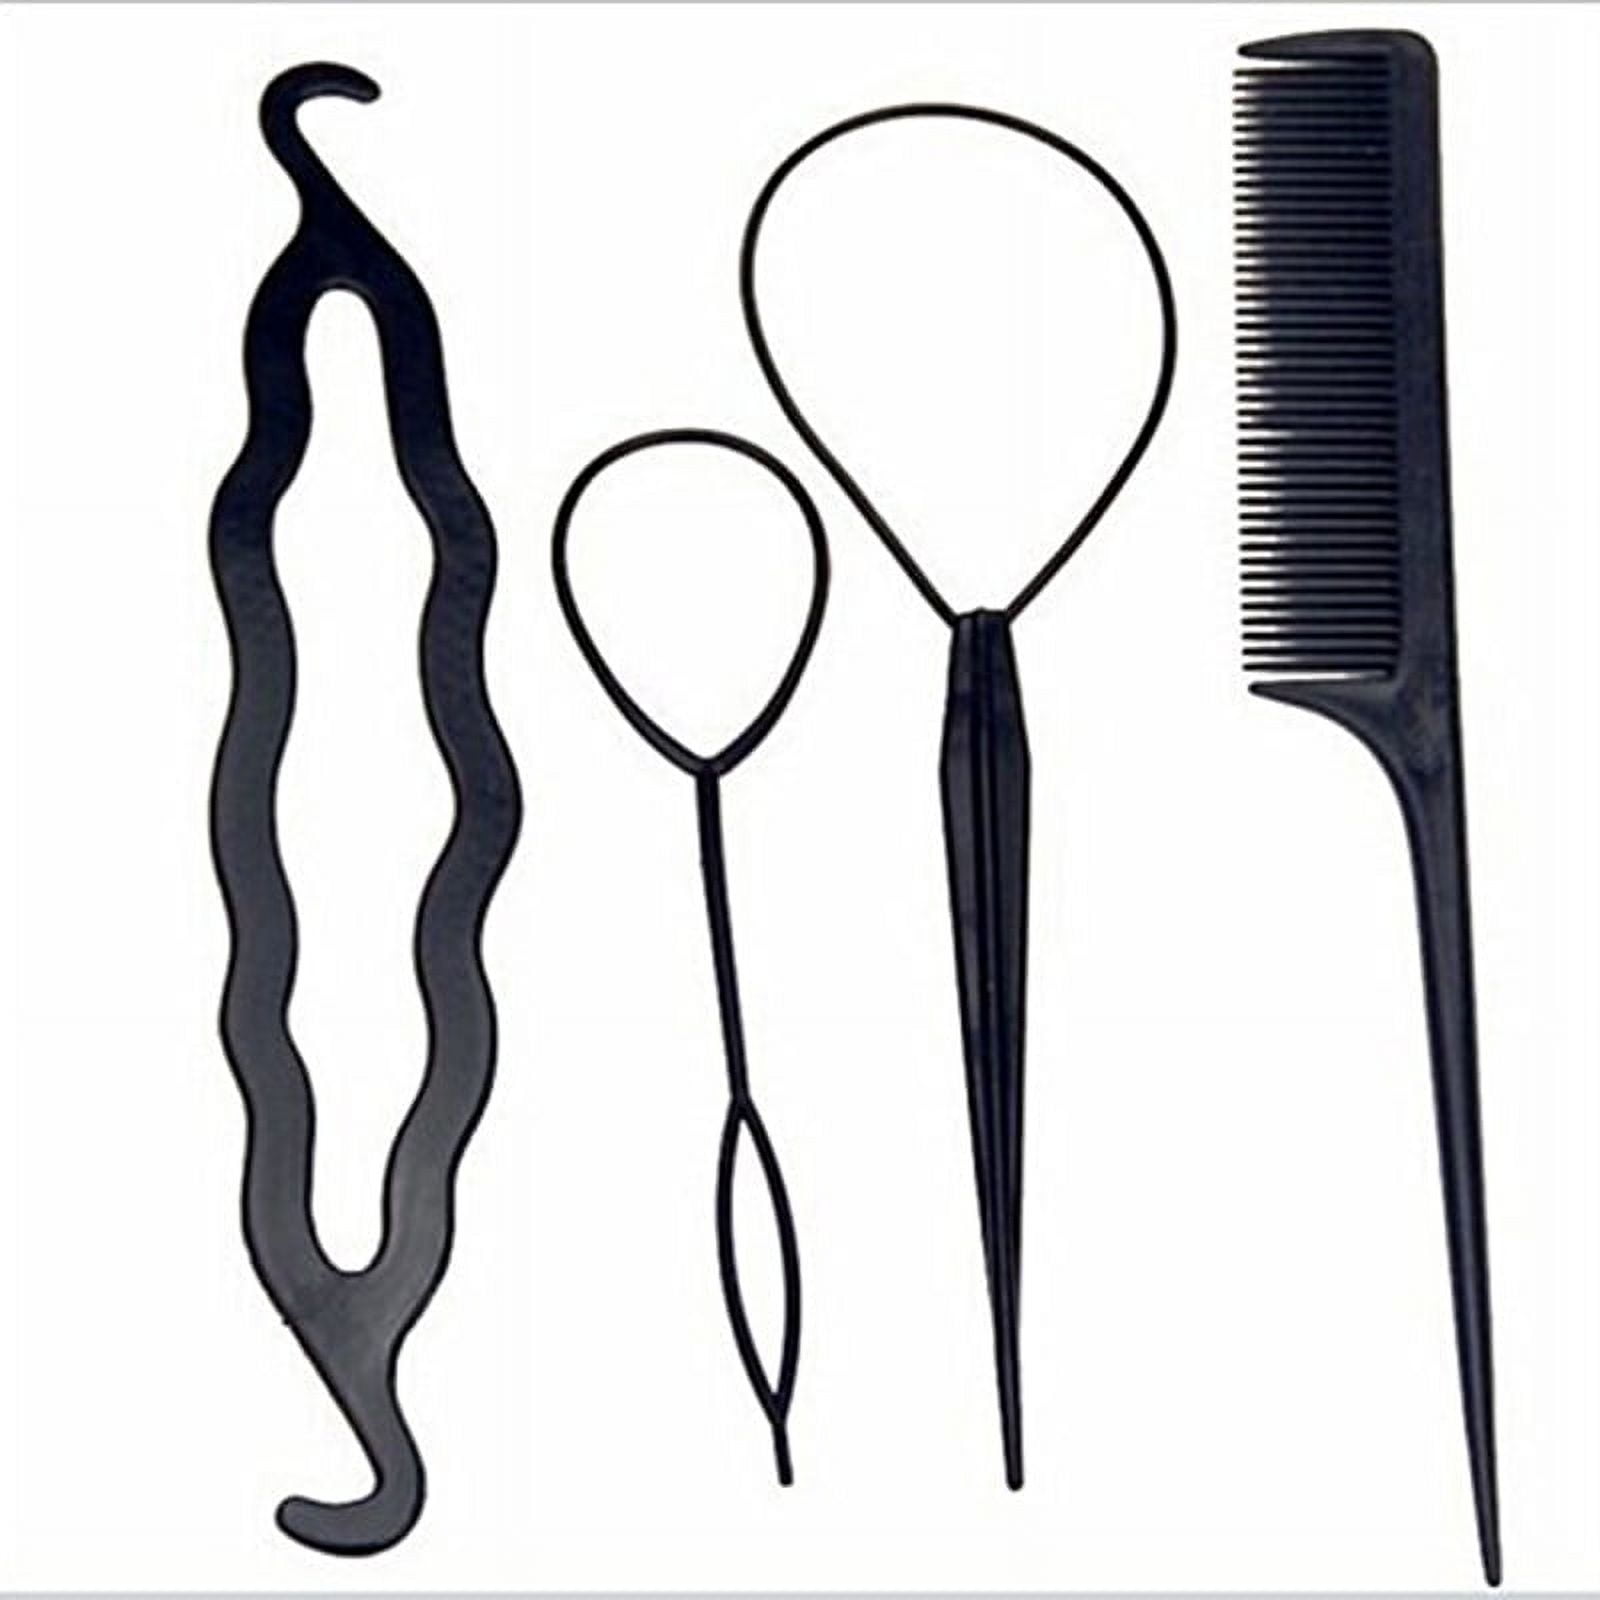 1Set Hairstyle Braiding Tools Set Pull-through Hair Needle Magic Variety  DIY Hair Accessoires Hair Comb Hair Styling Tools - AliExpress